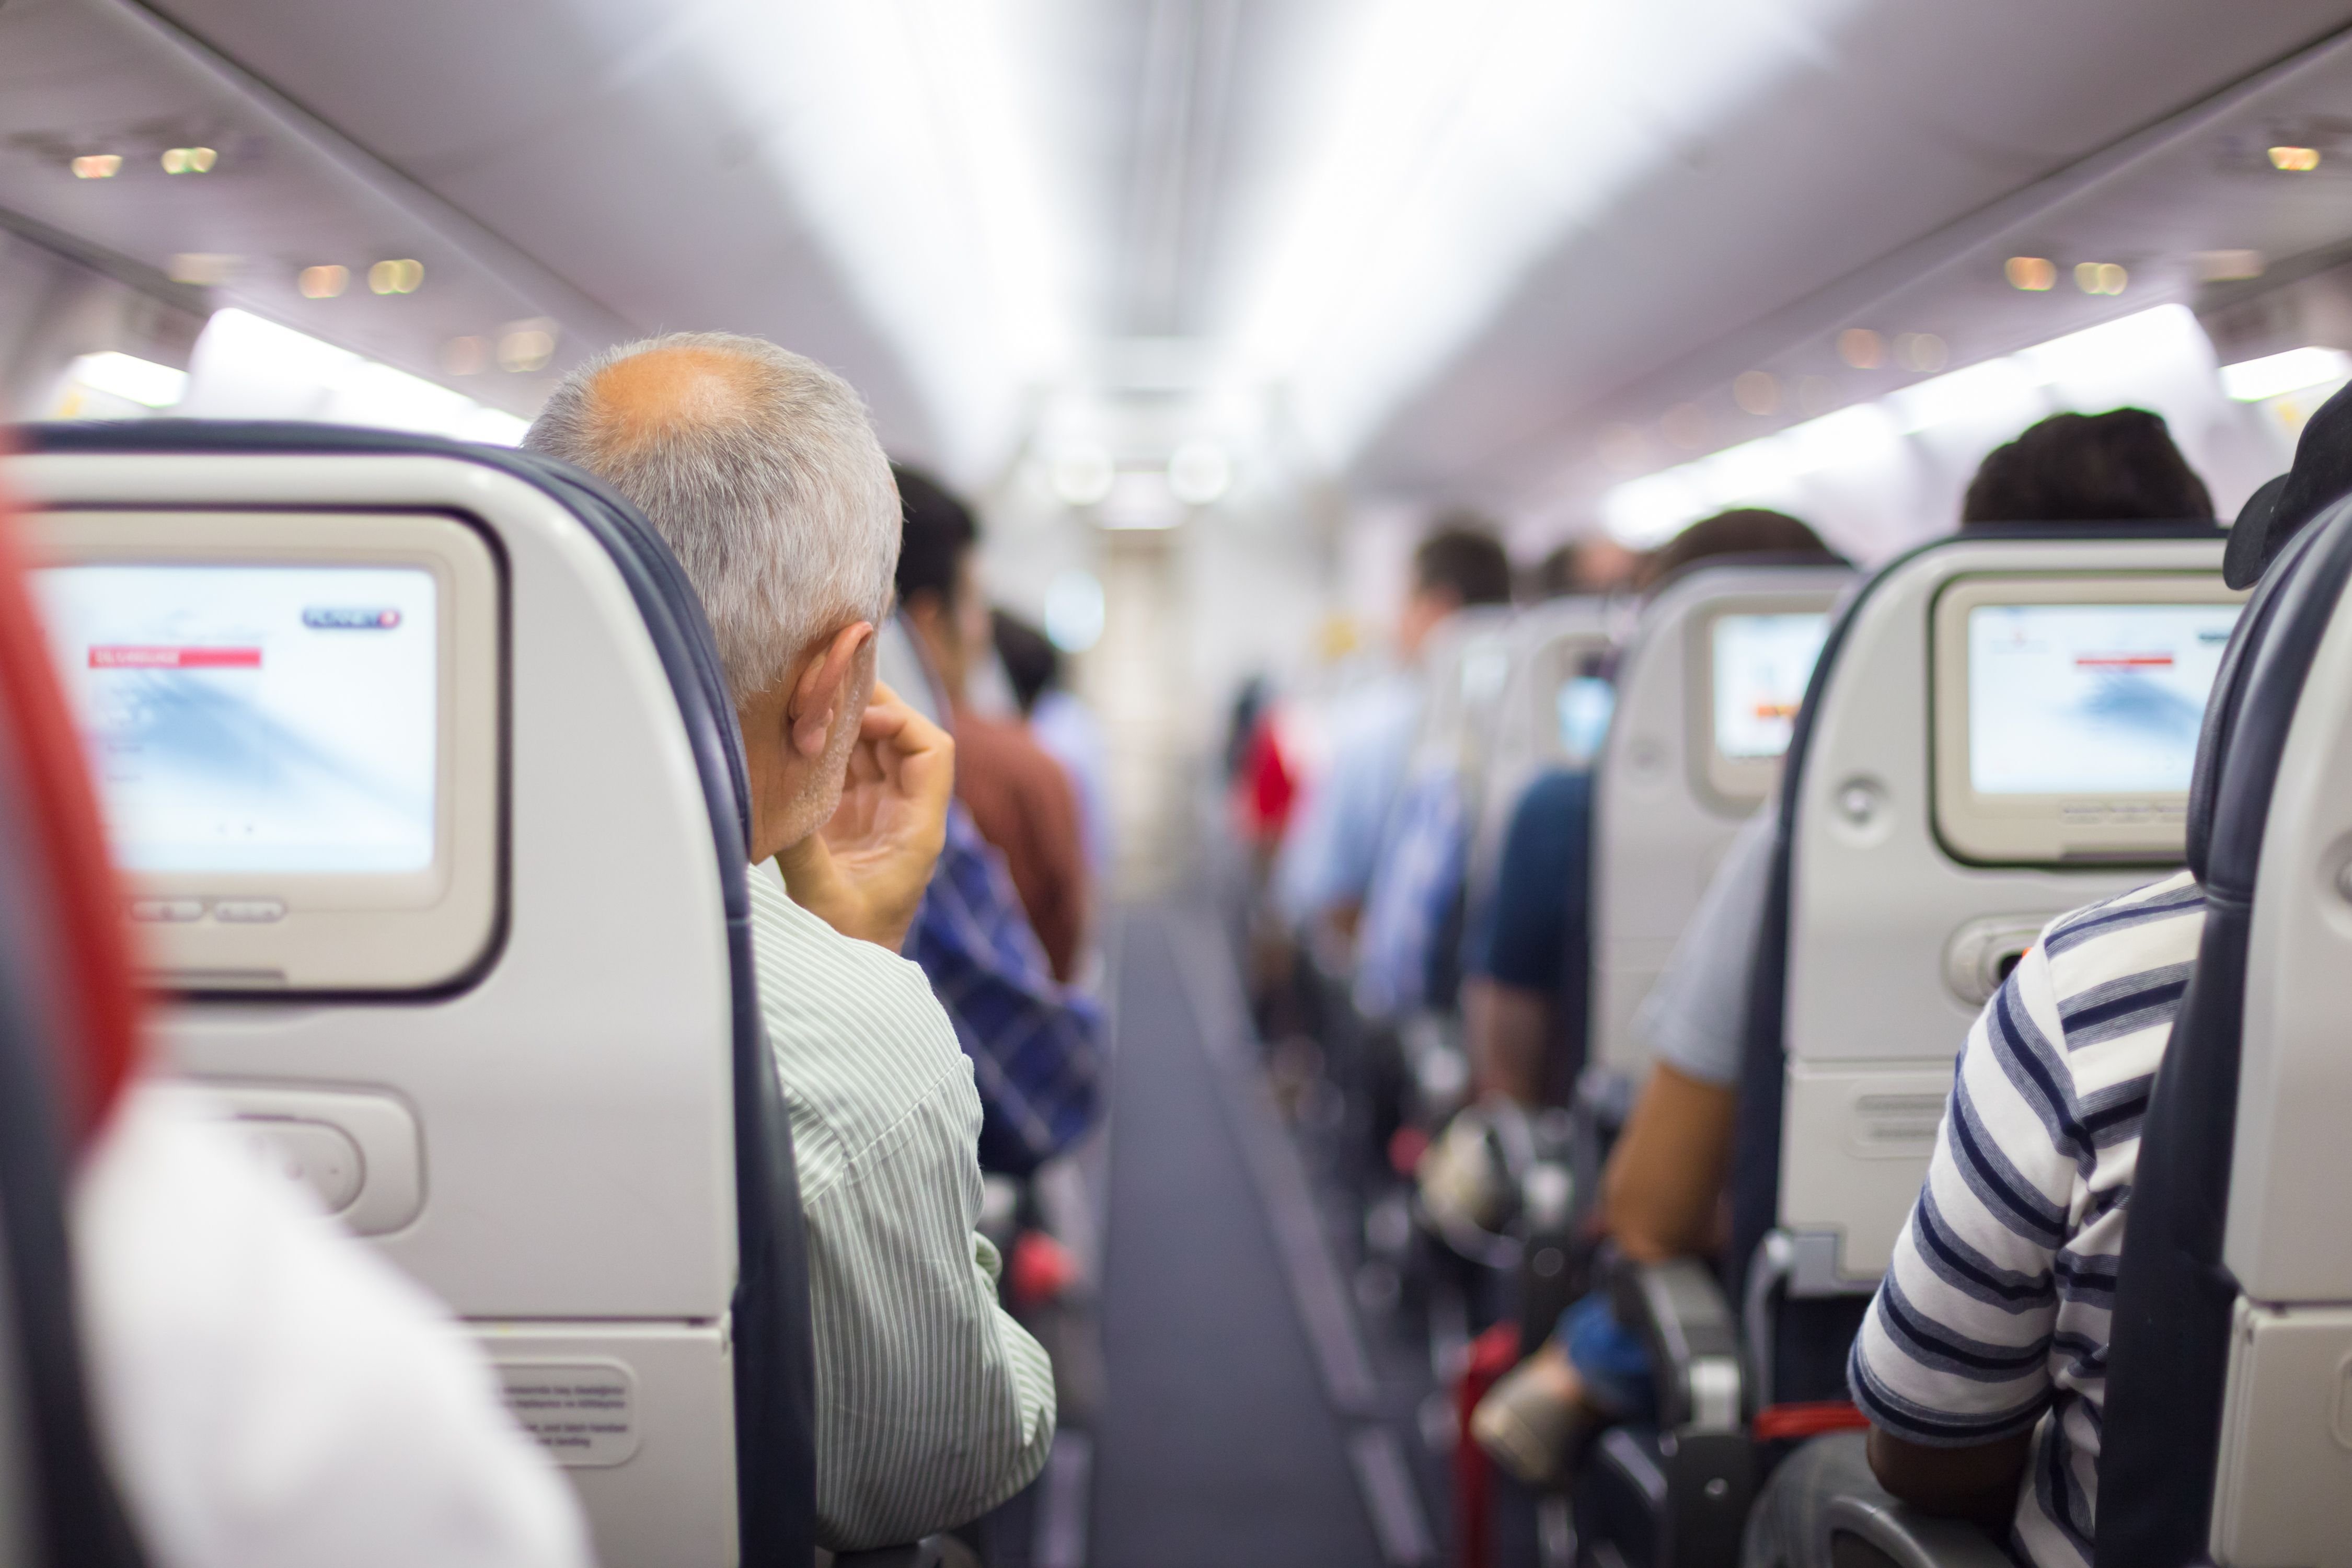 A plane hallways during a busy flight. | Source: Shutterstock